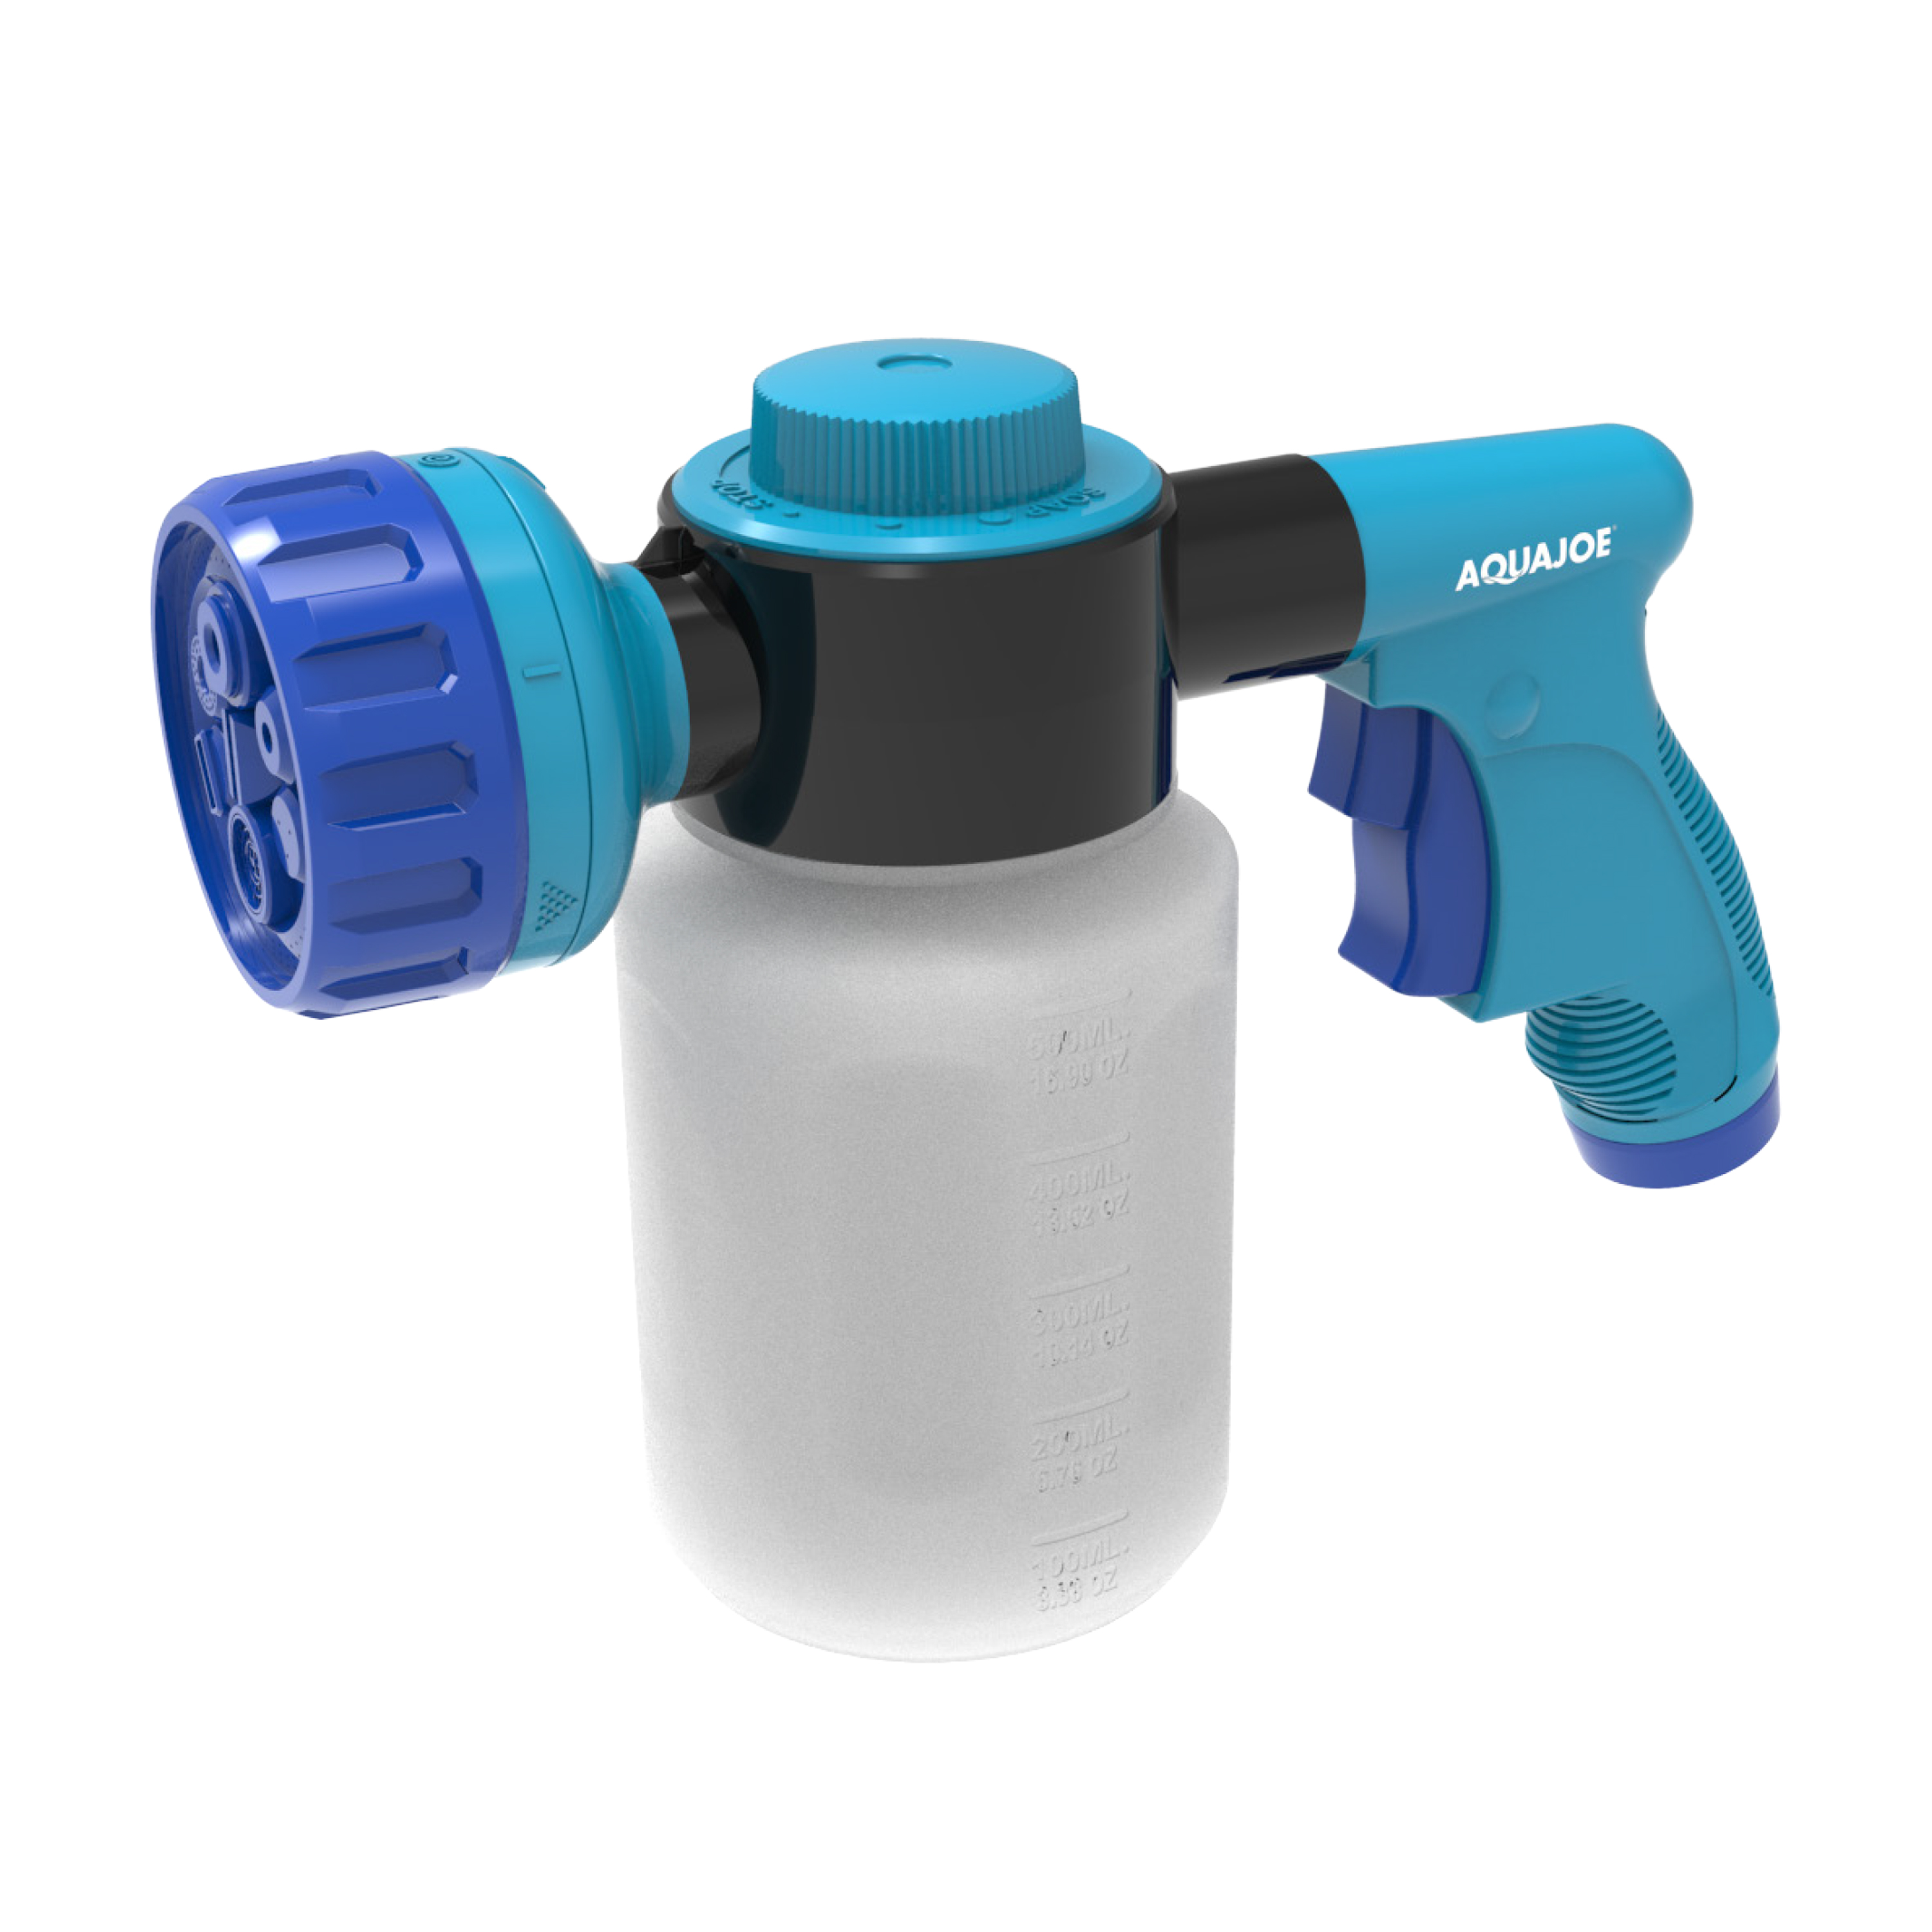 Aqua Joe AJ-MSG-TND Hose-Powered Multi Spray Gun W/ Quick Change Soap to  Water Dial | 7 Spray Patterns | Holds Up To 17 Fl Oz